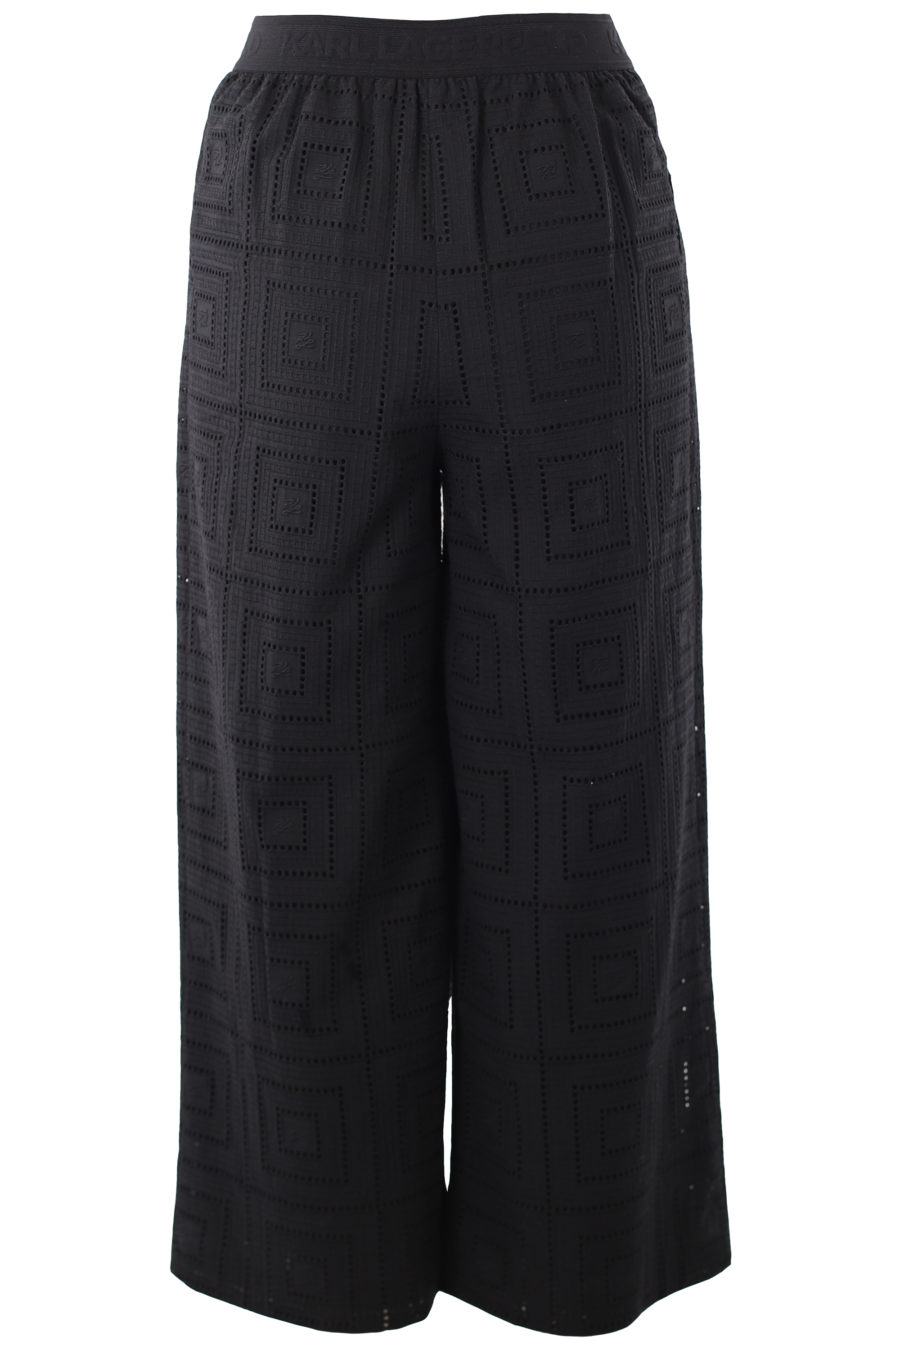 Pantalon noir brodé - IMG 1346